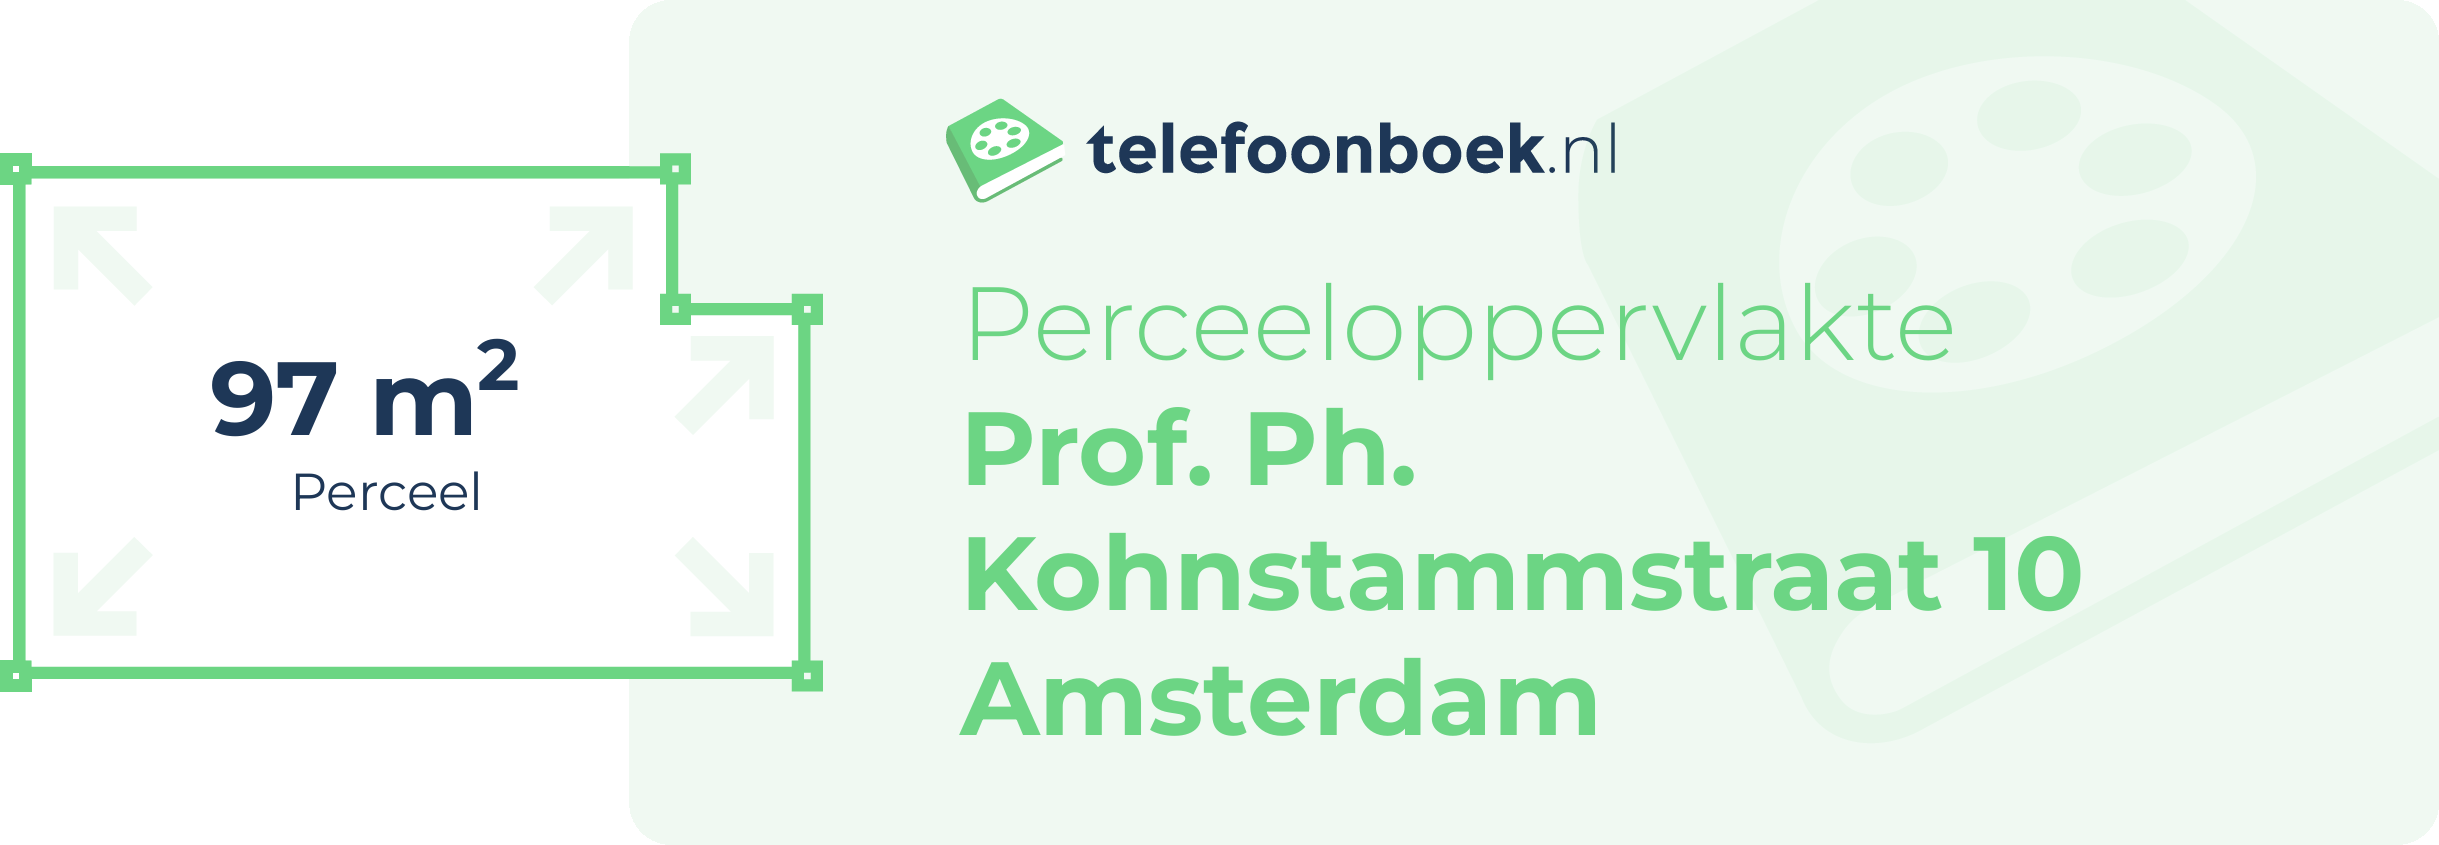 Perceeloppervlakte Prof. Ph. Kohnstammstraat 10 Amsterdam